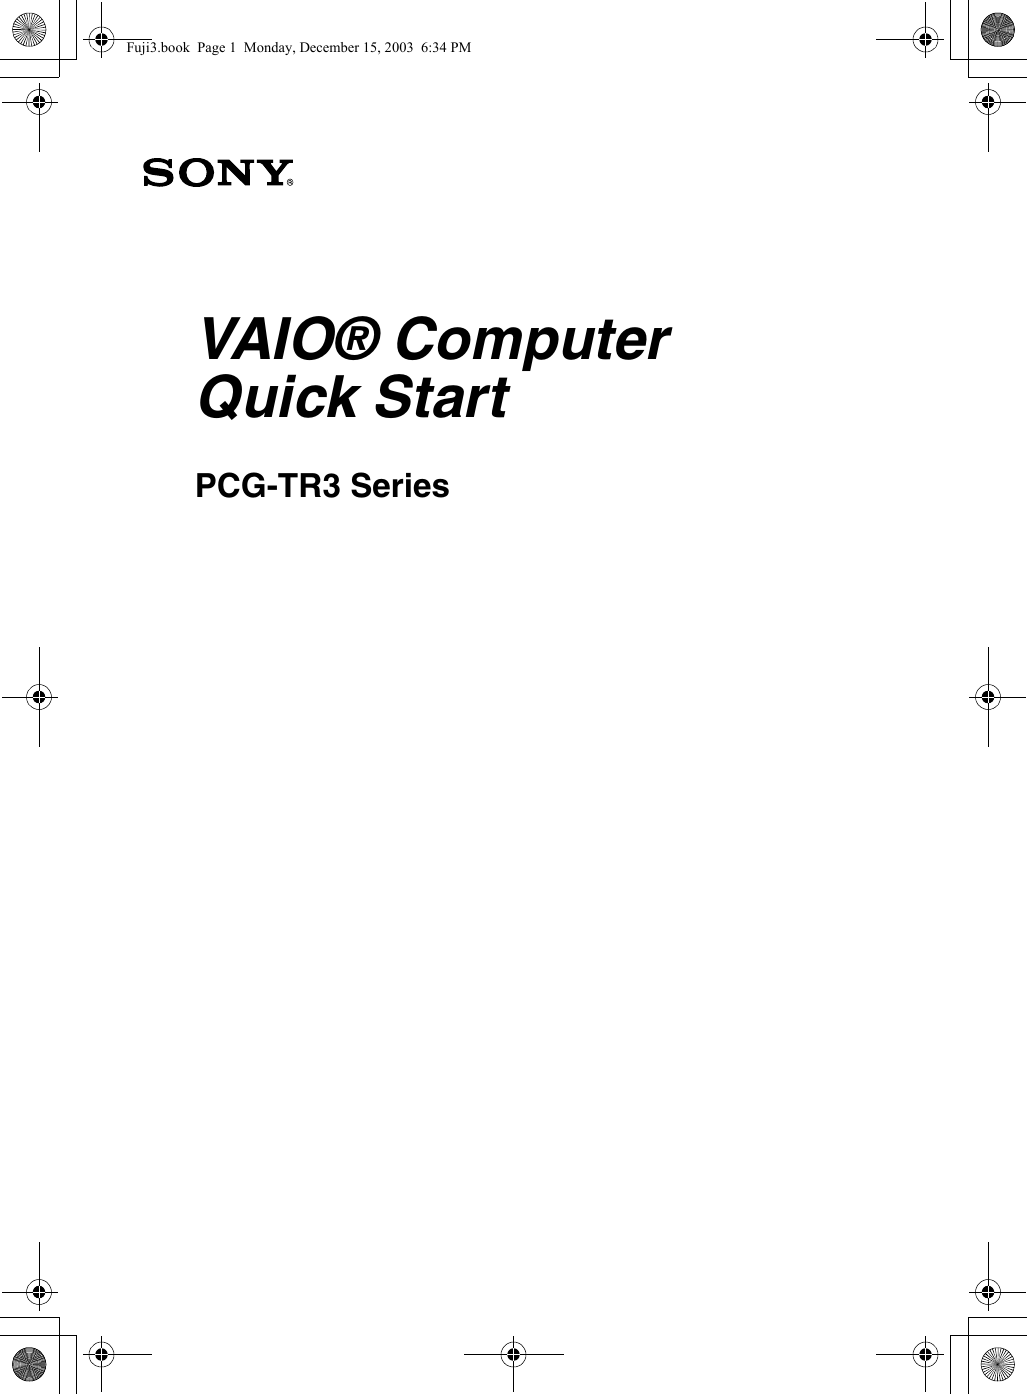 VAIO® Computer Quick StartPCG-TR3 SeriesFuji3.book  Page 1  Monday, December 15, 2003  6:34 PM